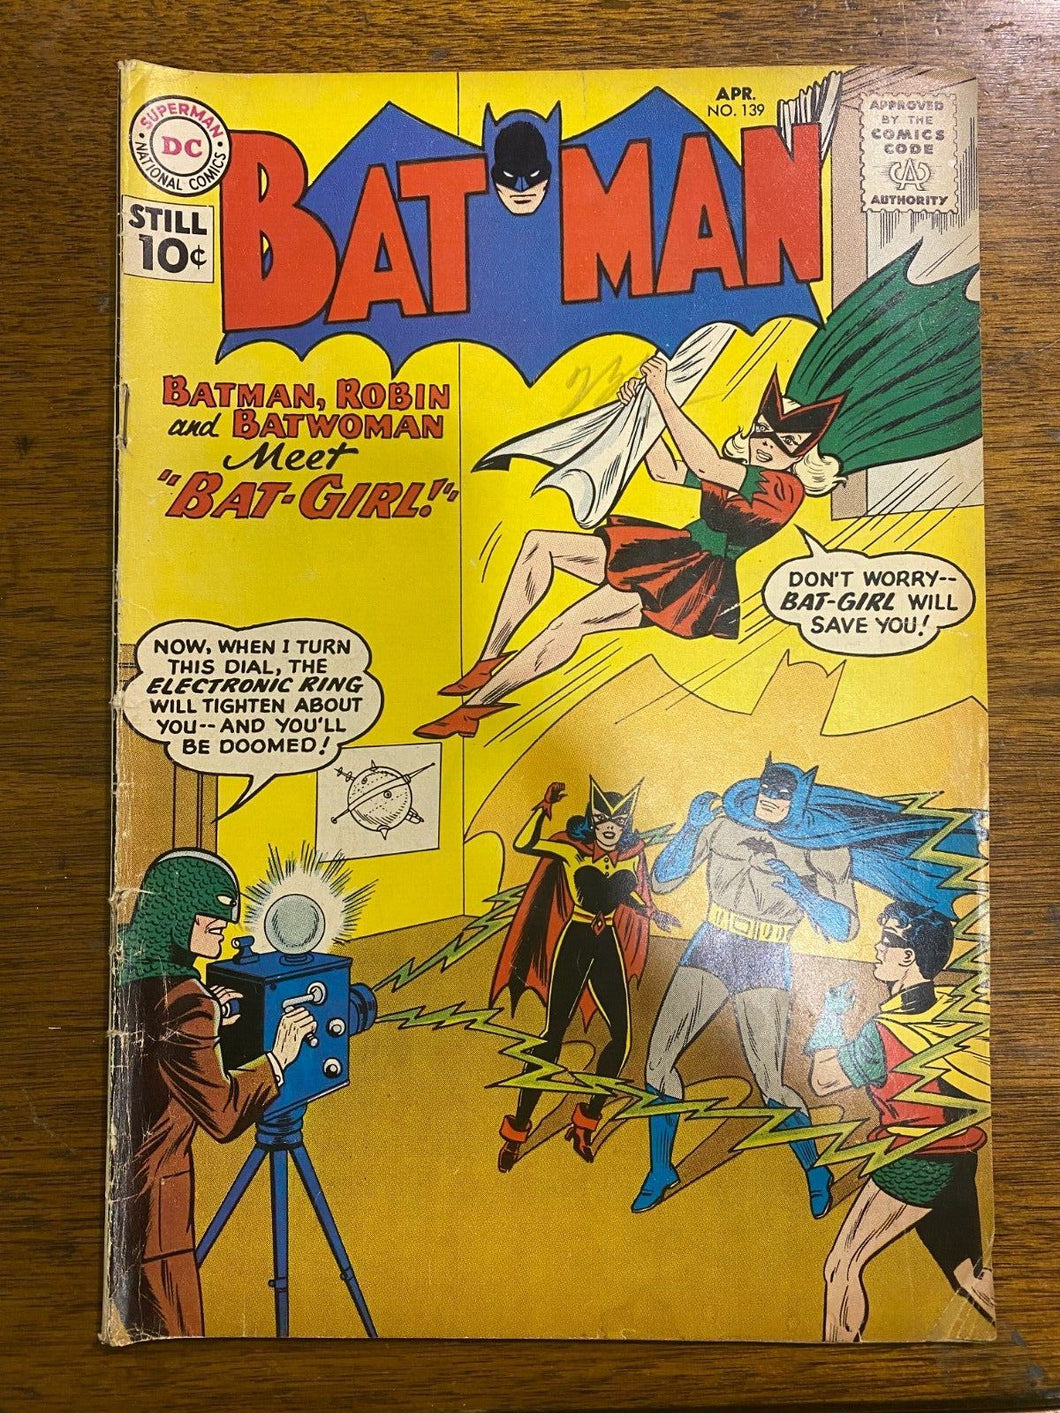 1961 DC Comics Batman Issue 139